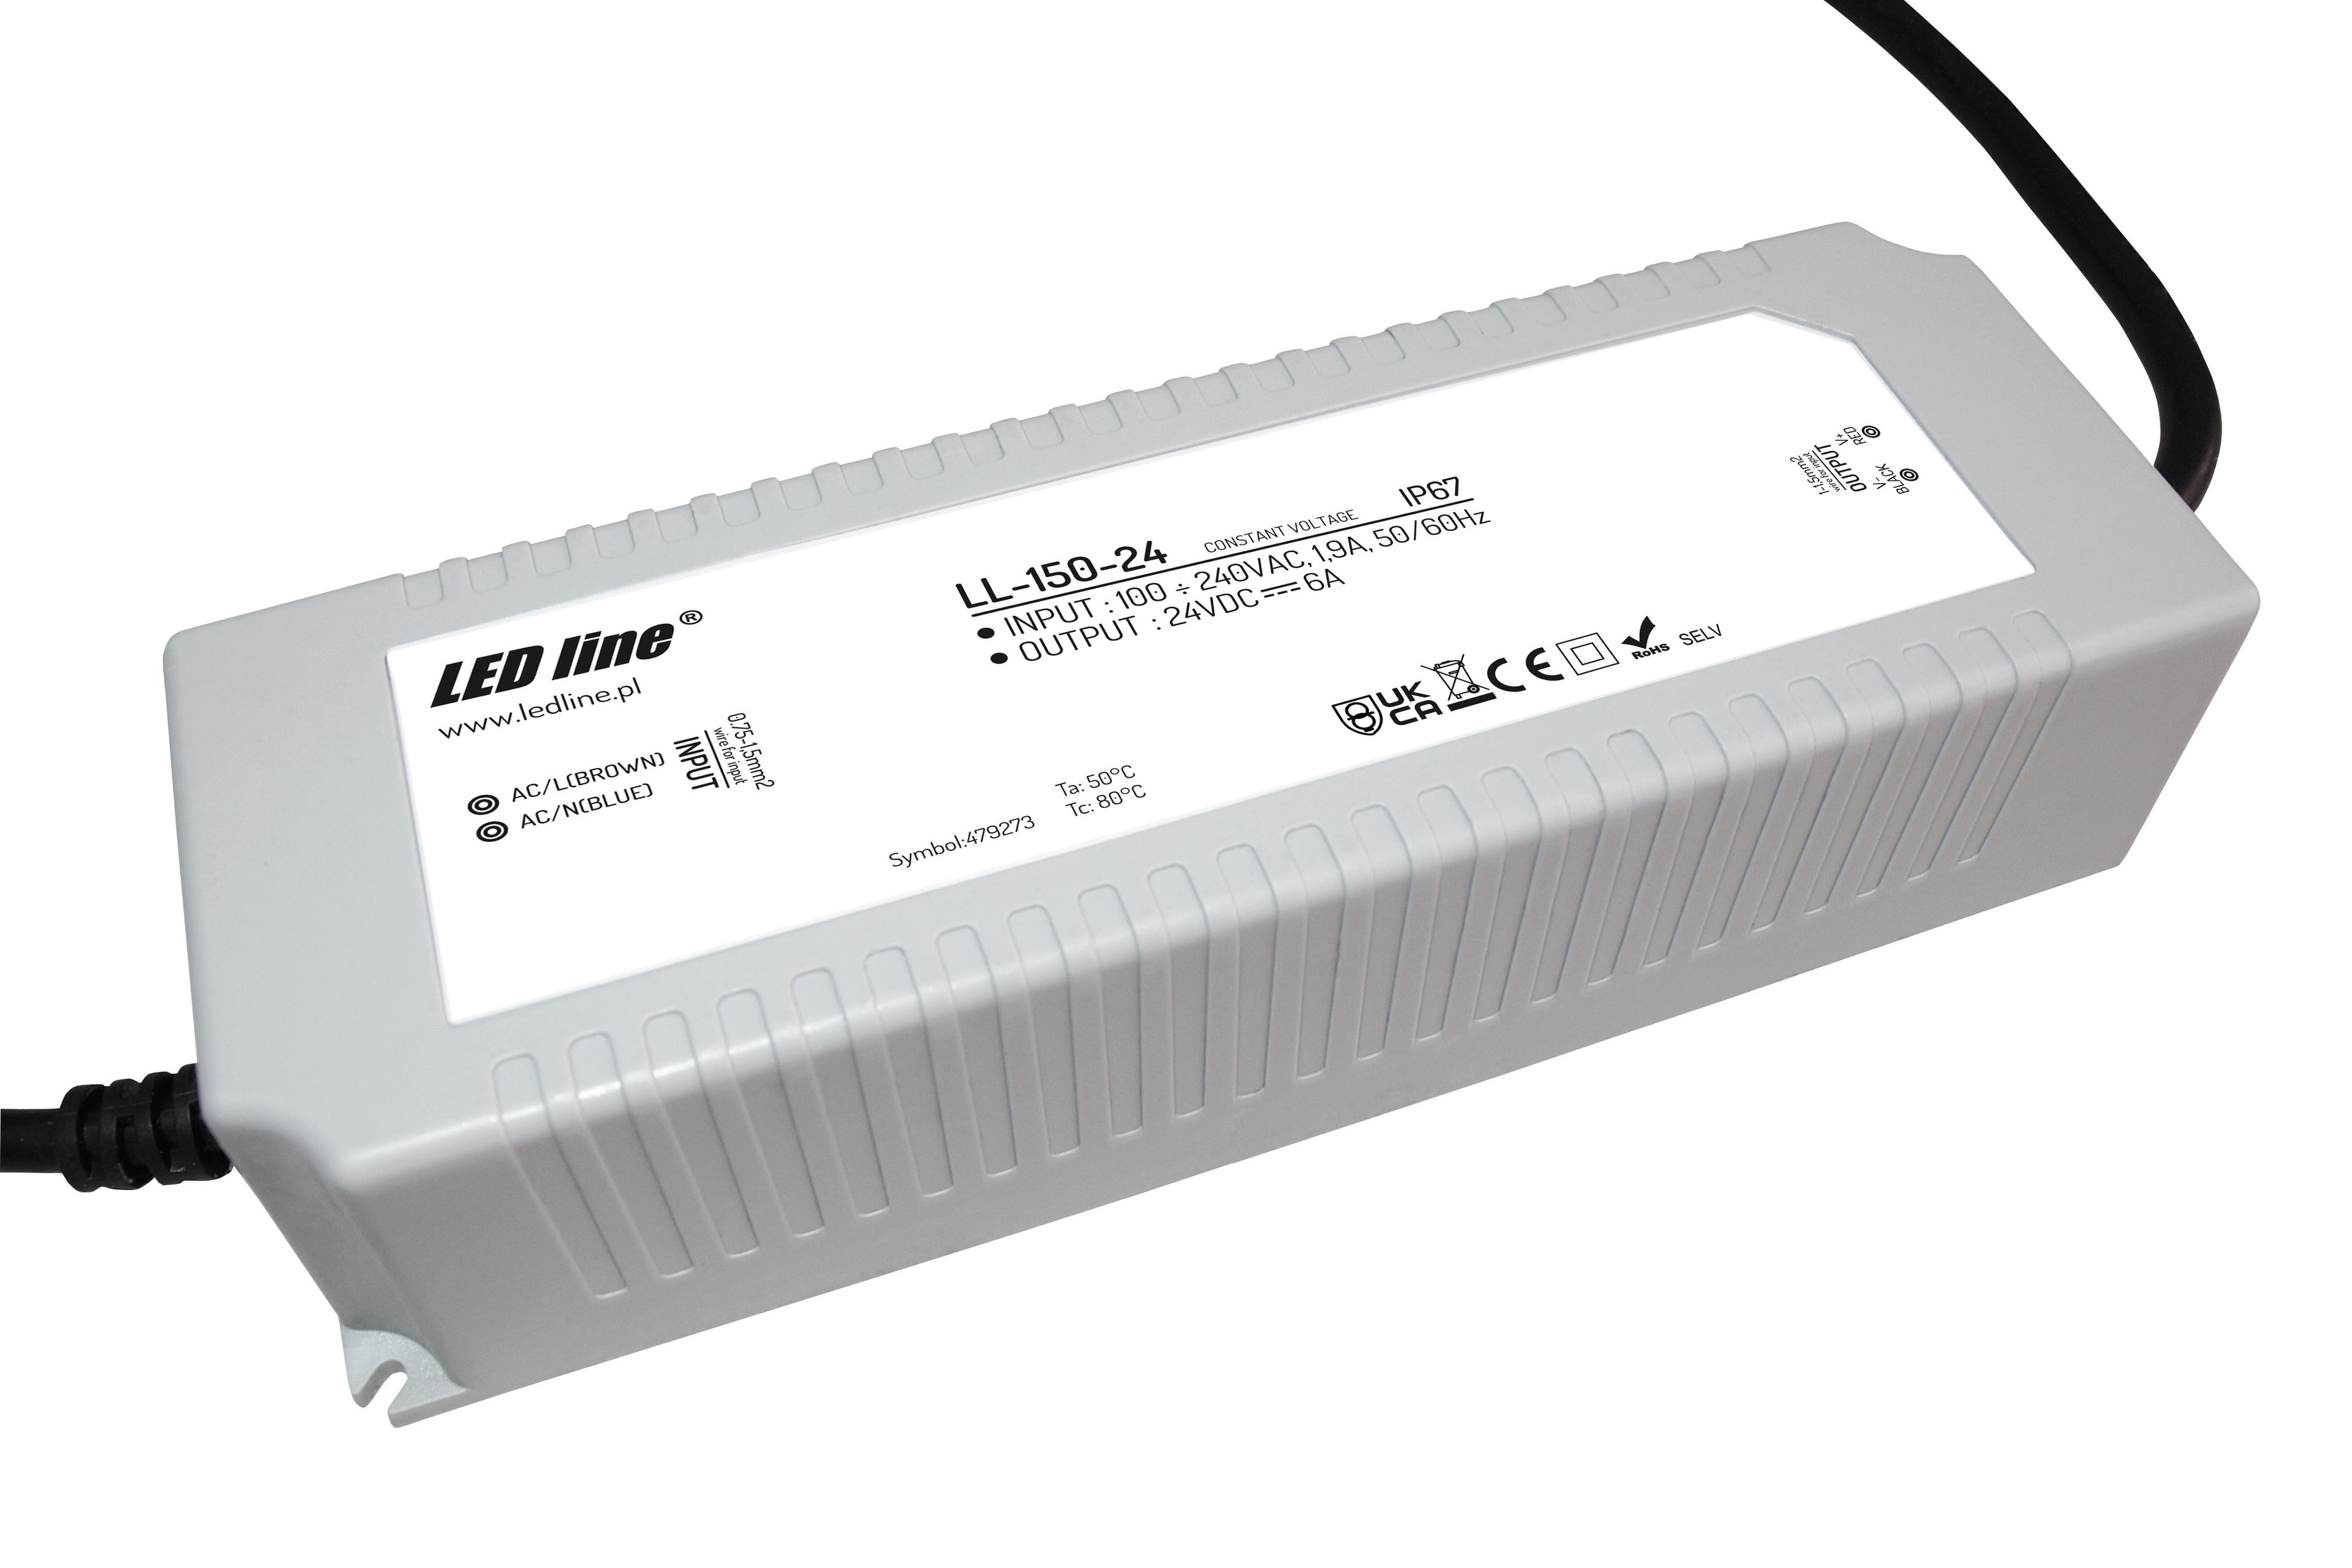 Zasilacz LED line 24V 150W 6A wodoodporny IP67 LL-150-24-0